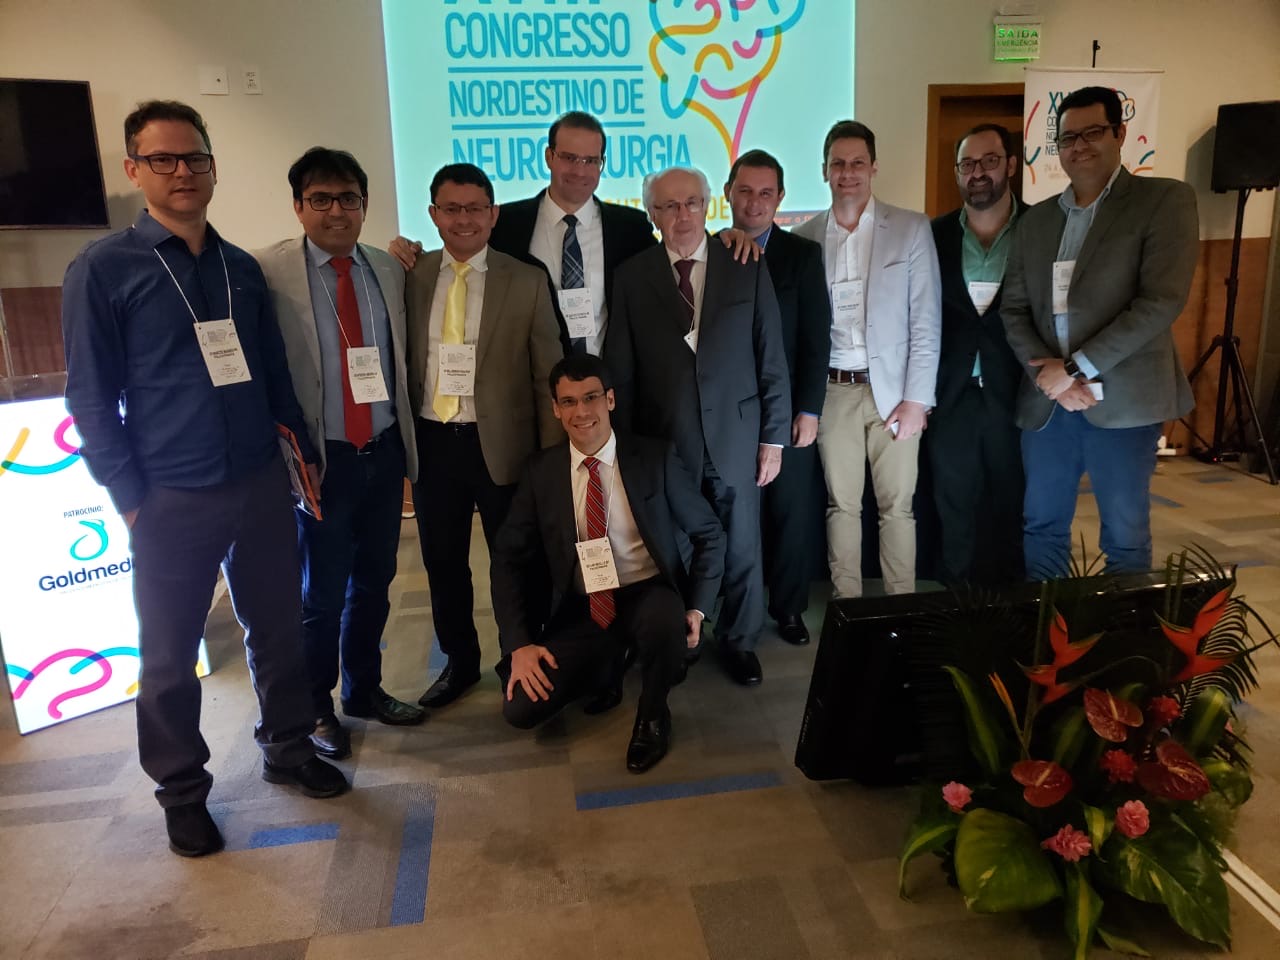 XVIII Congresso Nordestino Neurocirurgia